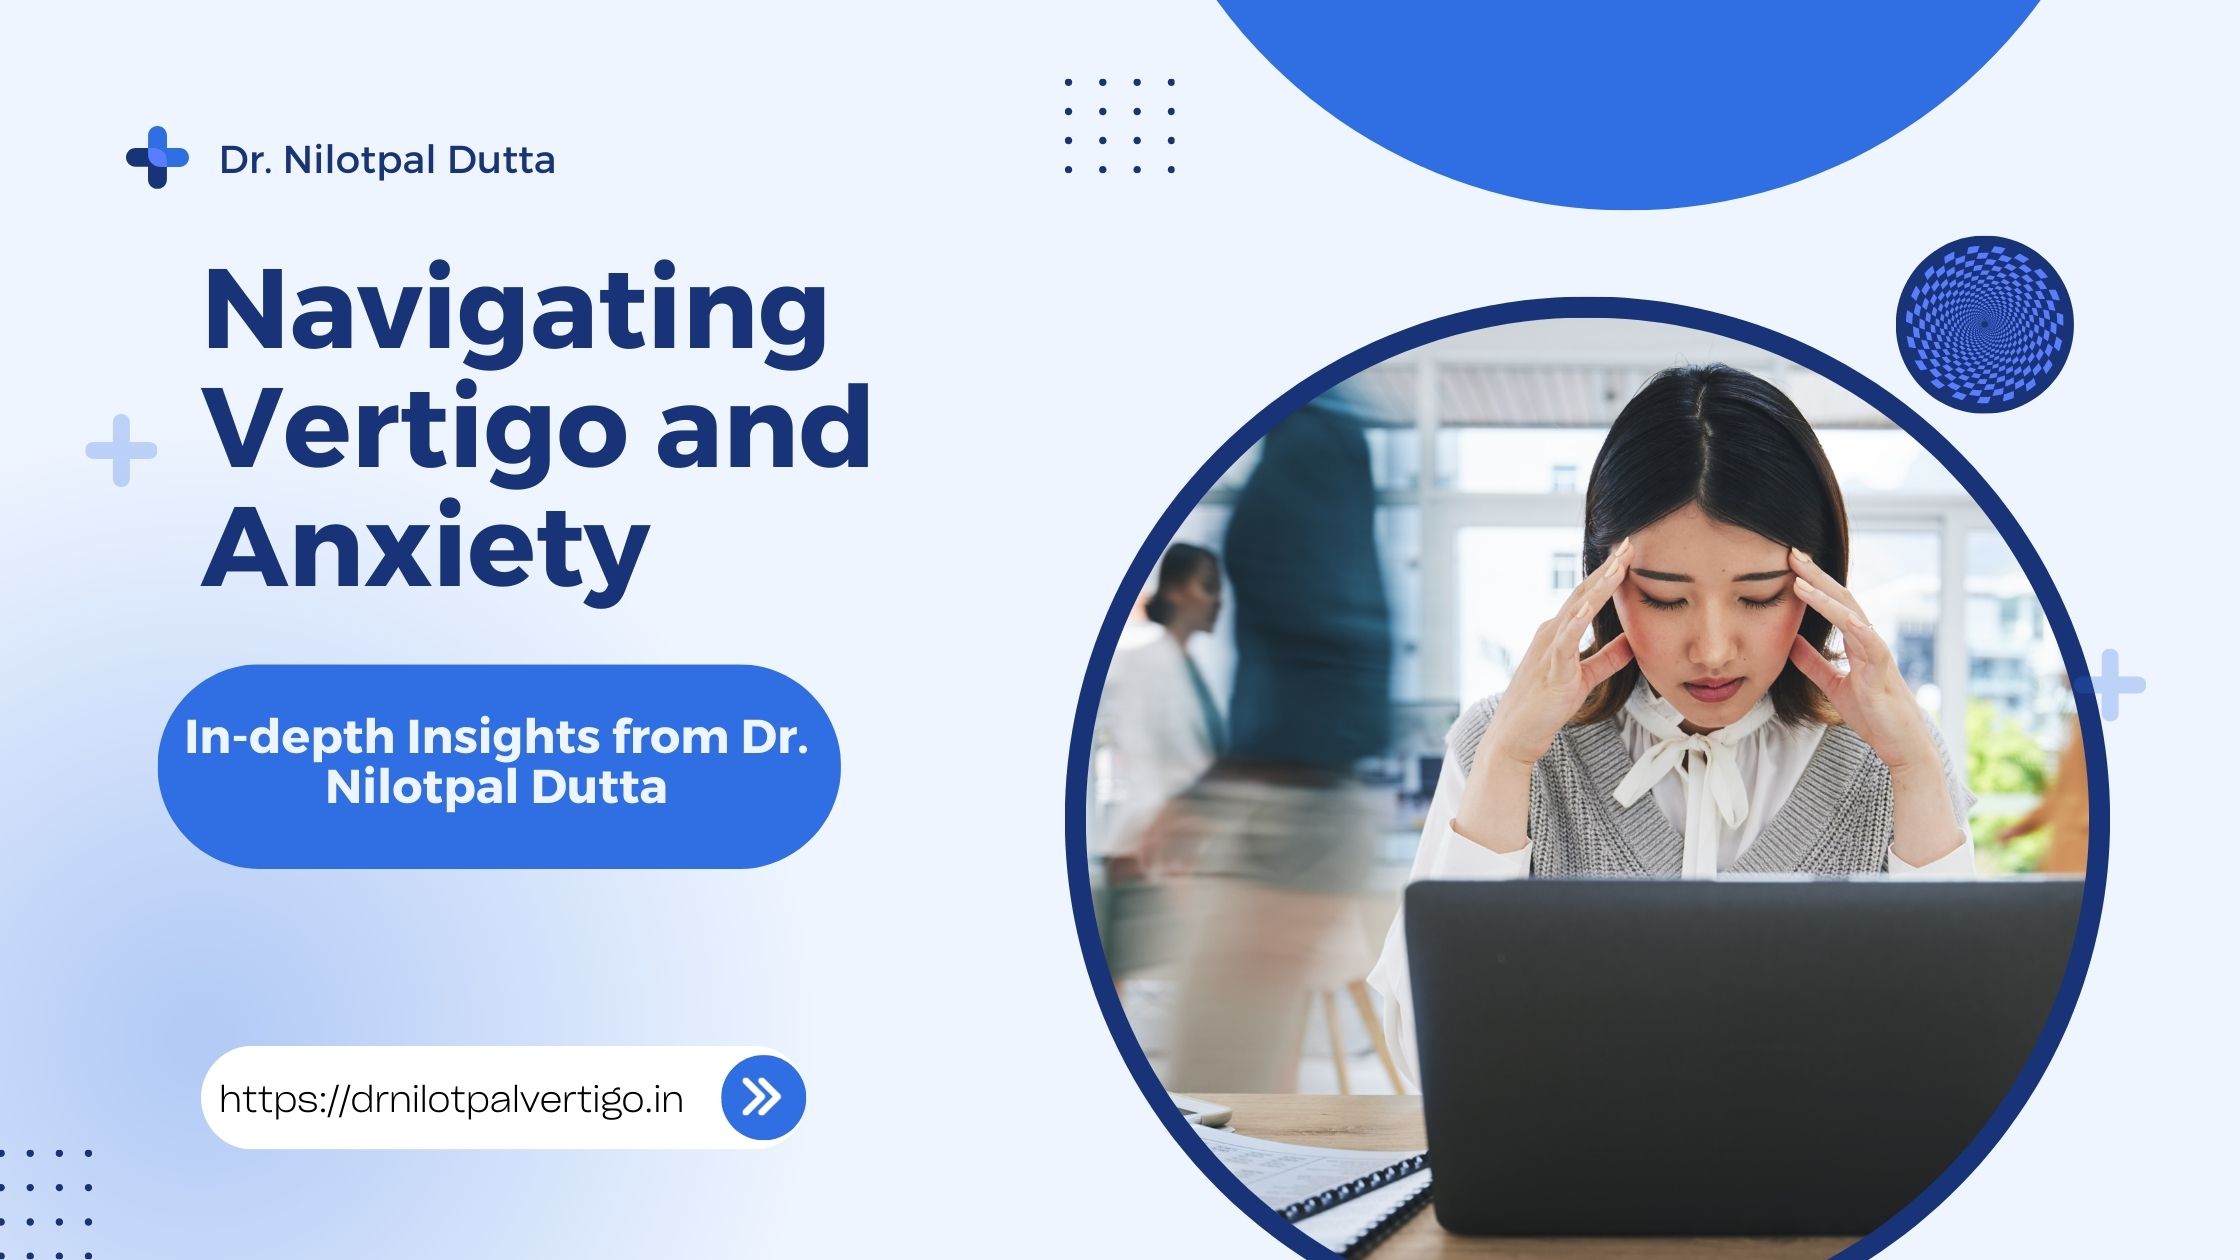 Navigating Vertigo and Anxiety: In-depth Insights from Dr. Nilotpal Dutta, the Best Vertigo Specialist in India